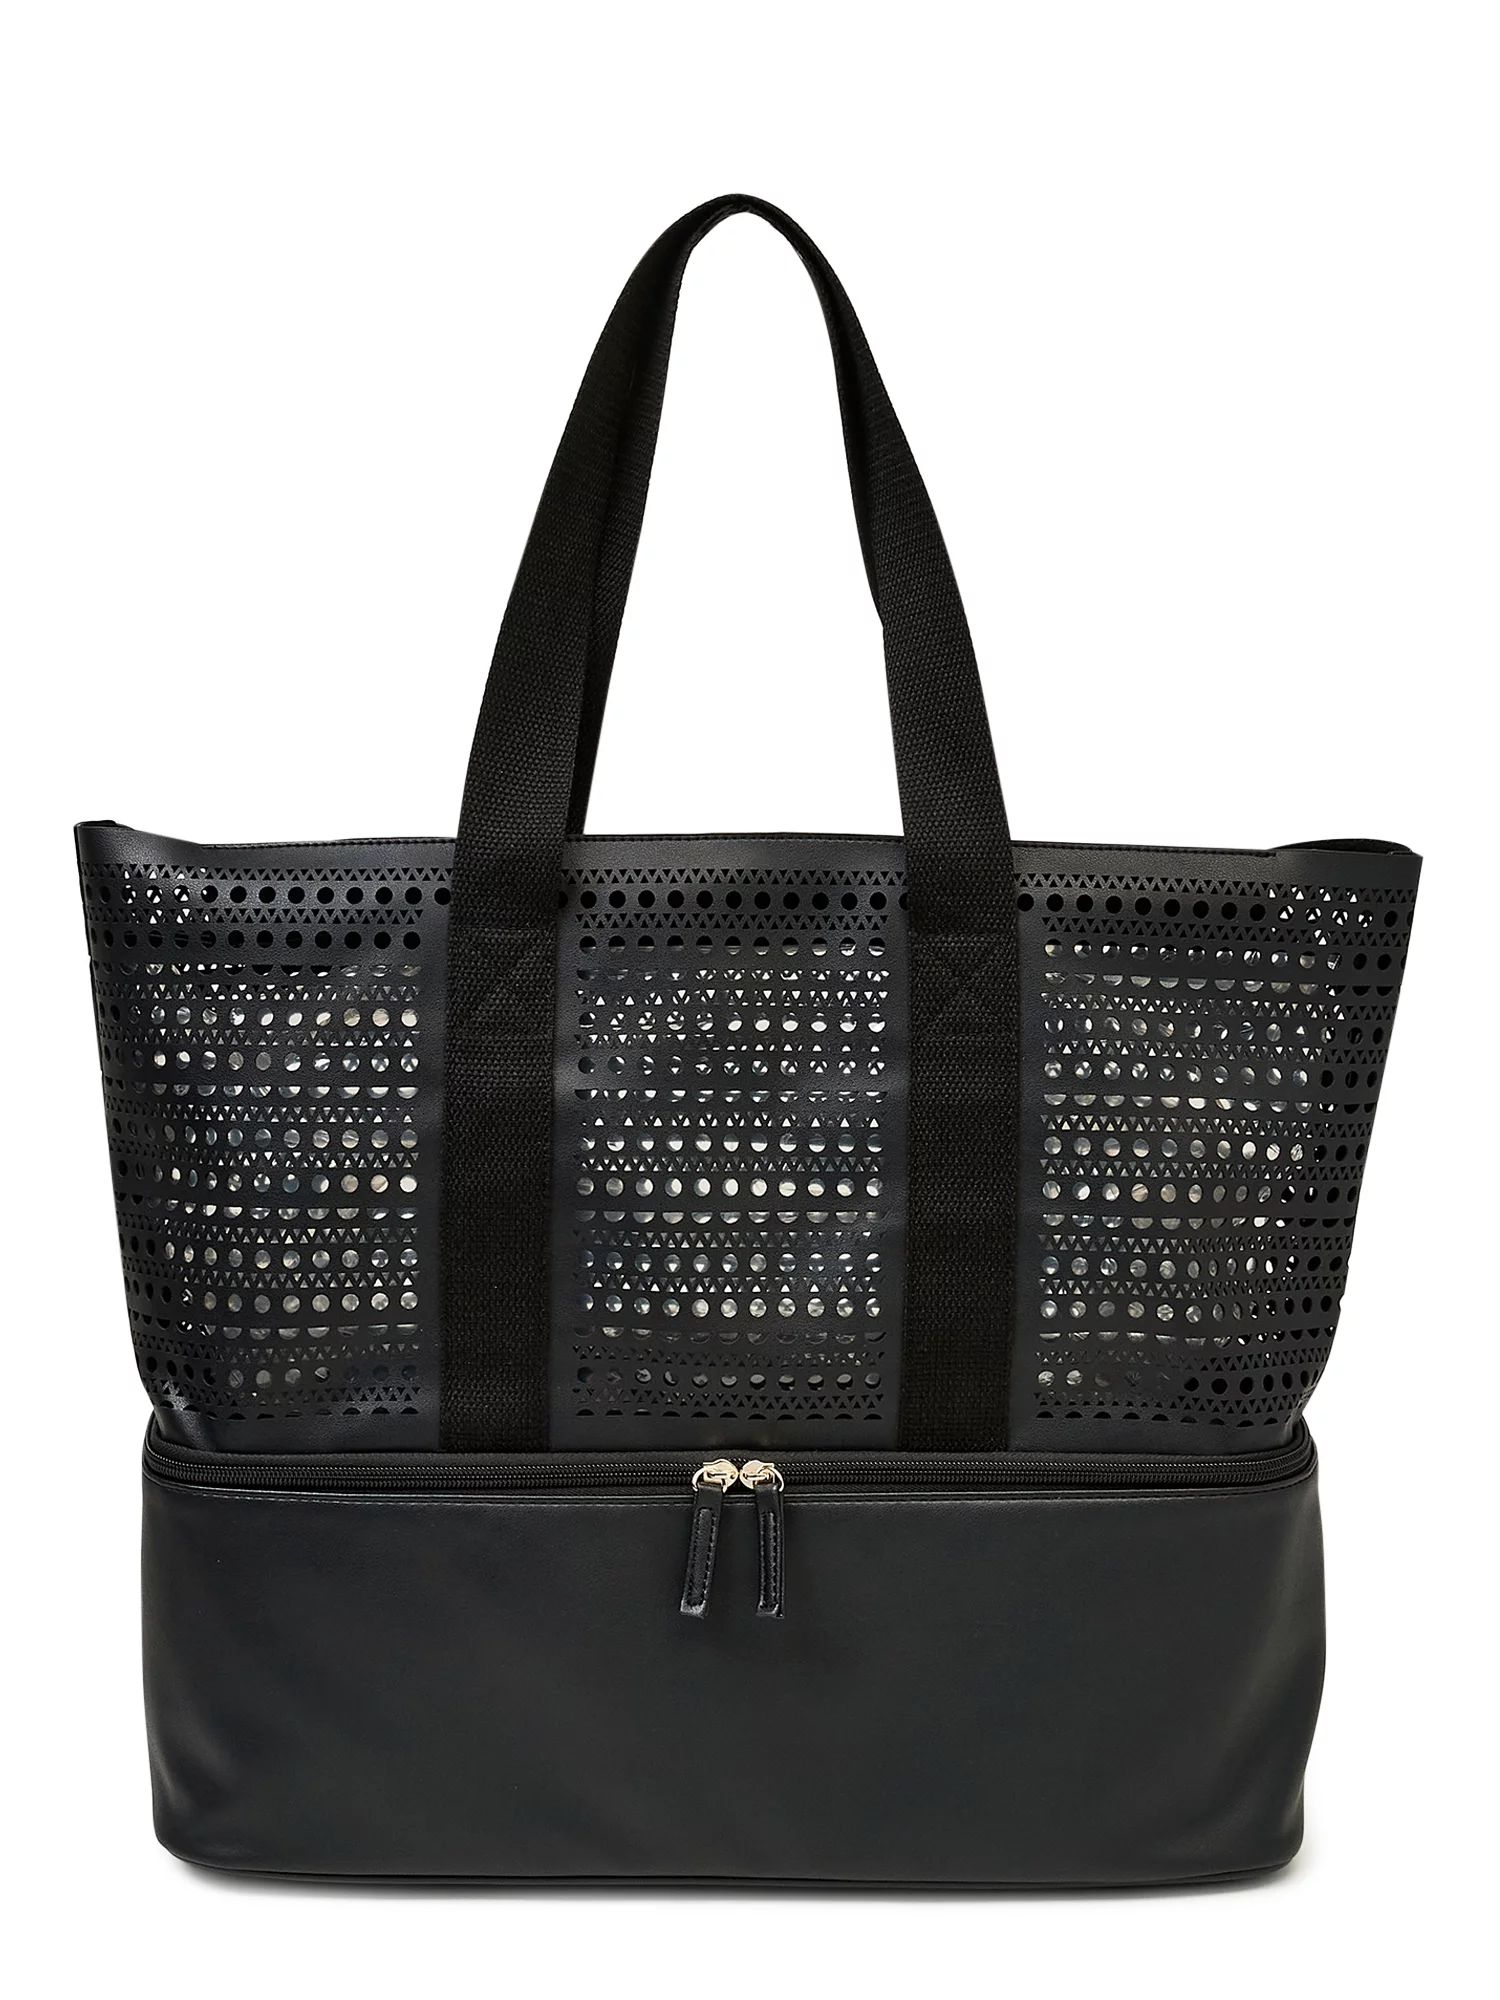 No Boundaries Women’s Beach Tote Handbag with Zip Bottom Cooler Black Perforated | Walmart (US)